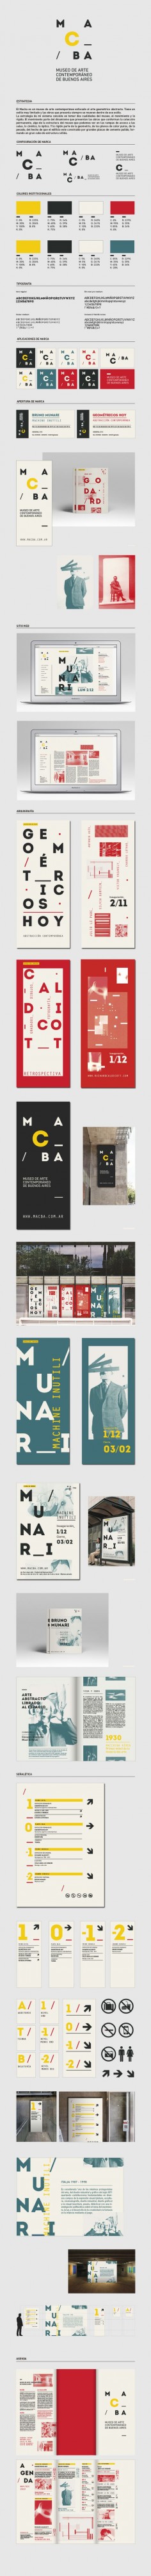 Sistema MACBA by Florencia Beil, via Behance | #visual #identity #design